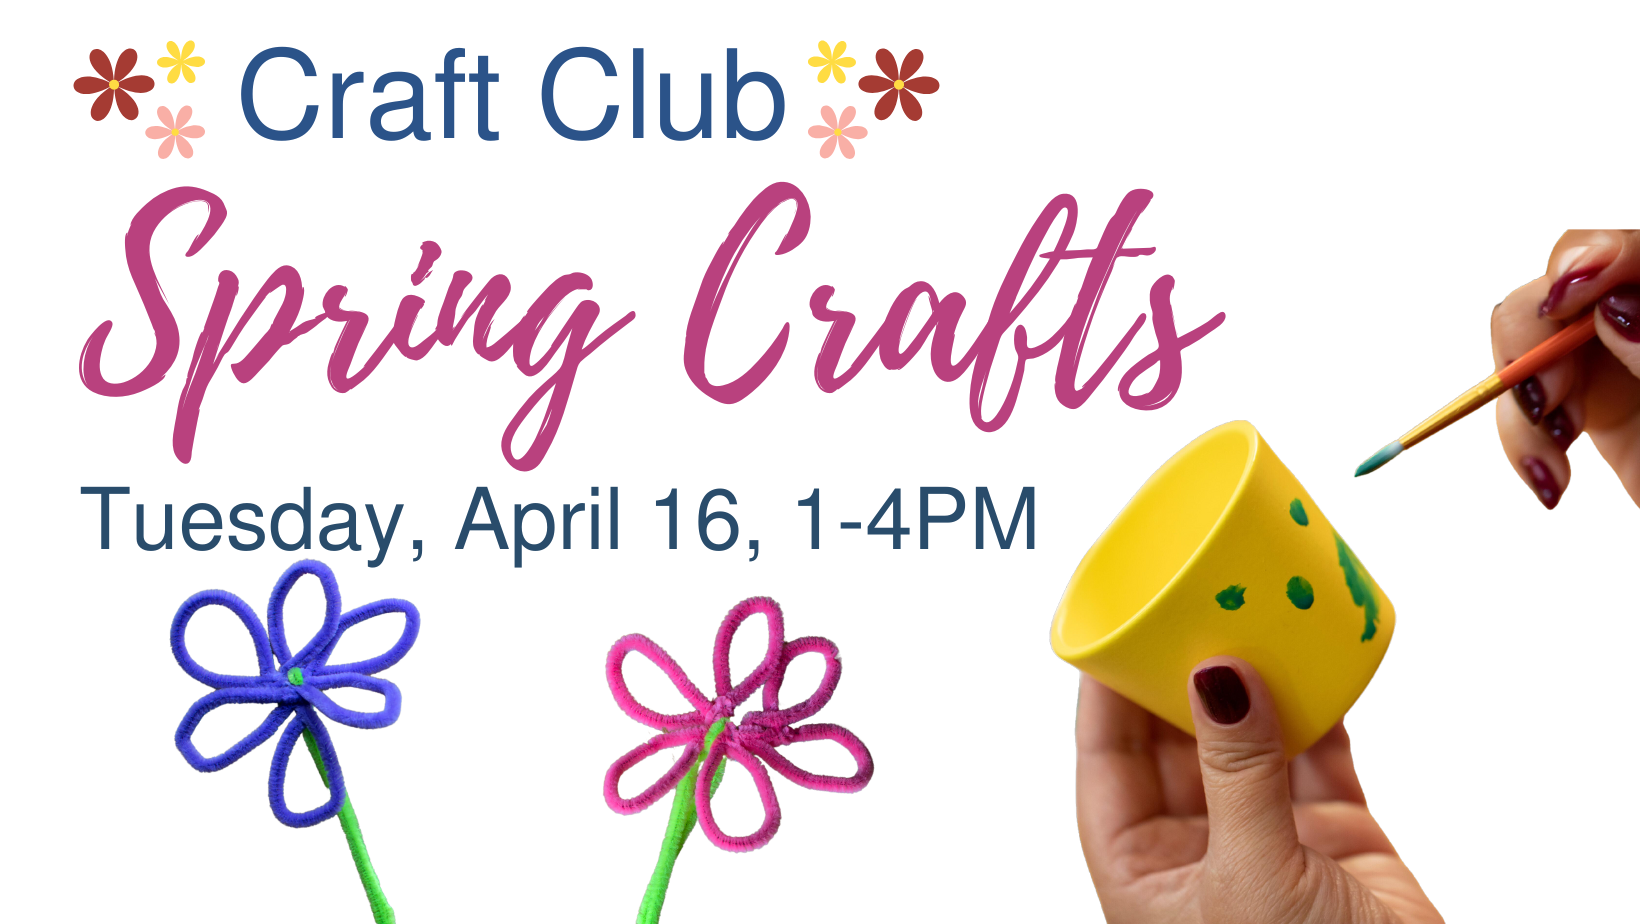 Craft Club Spring Crafts